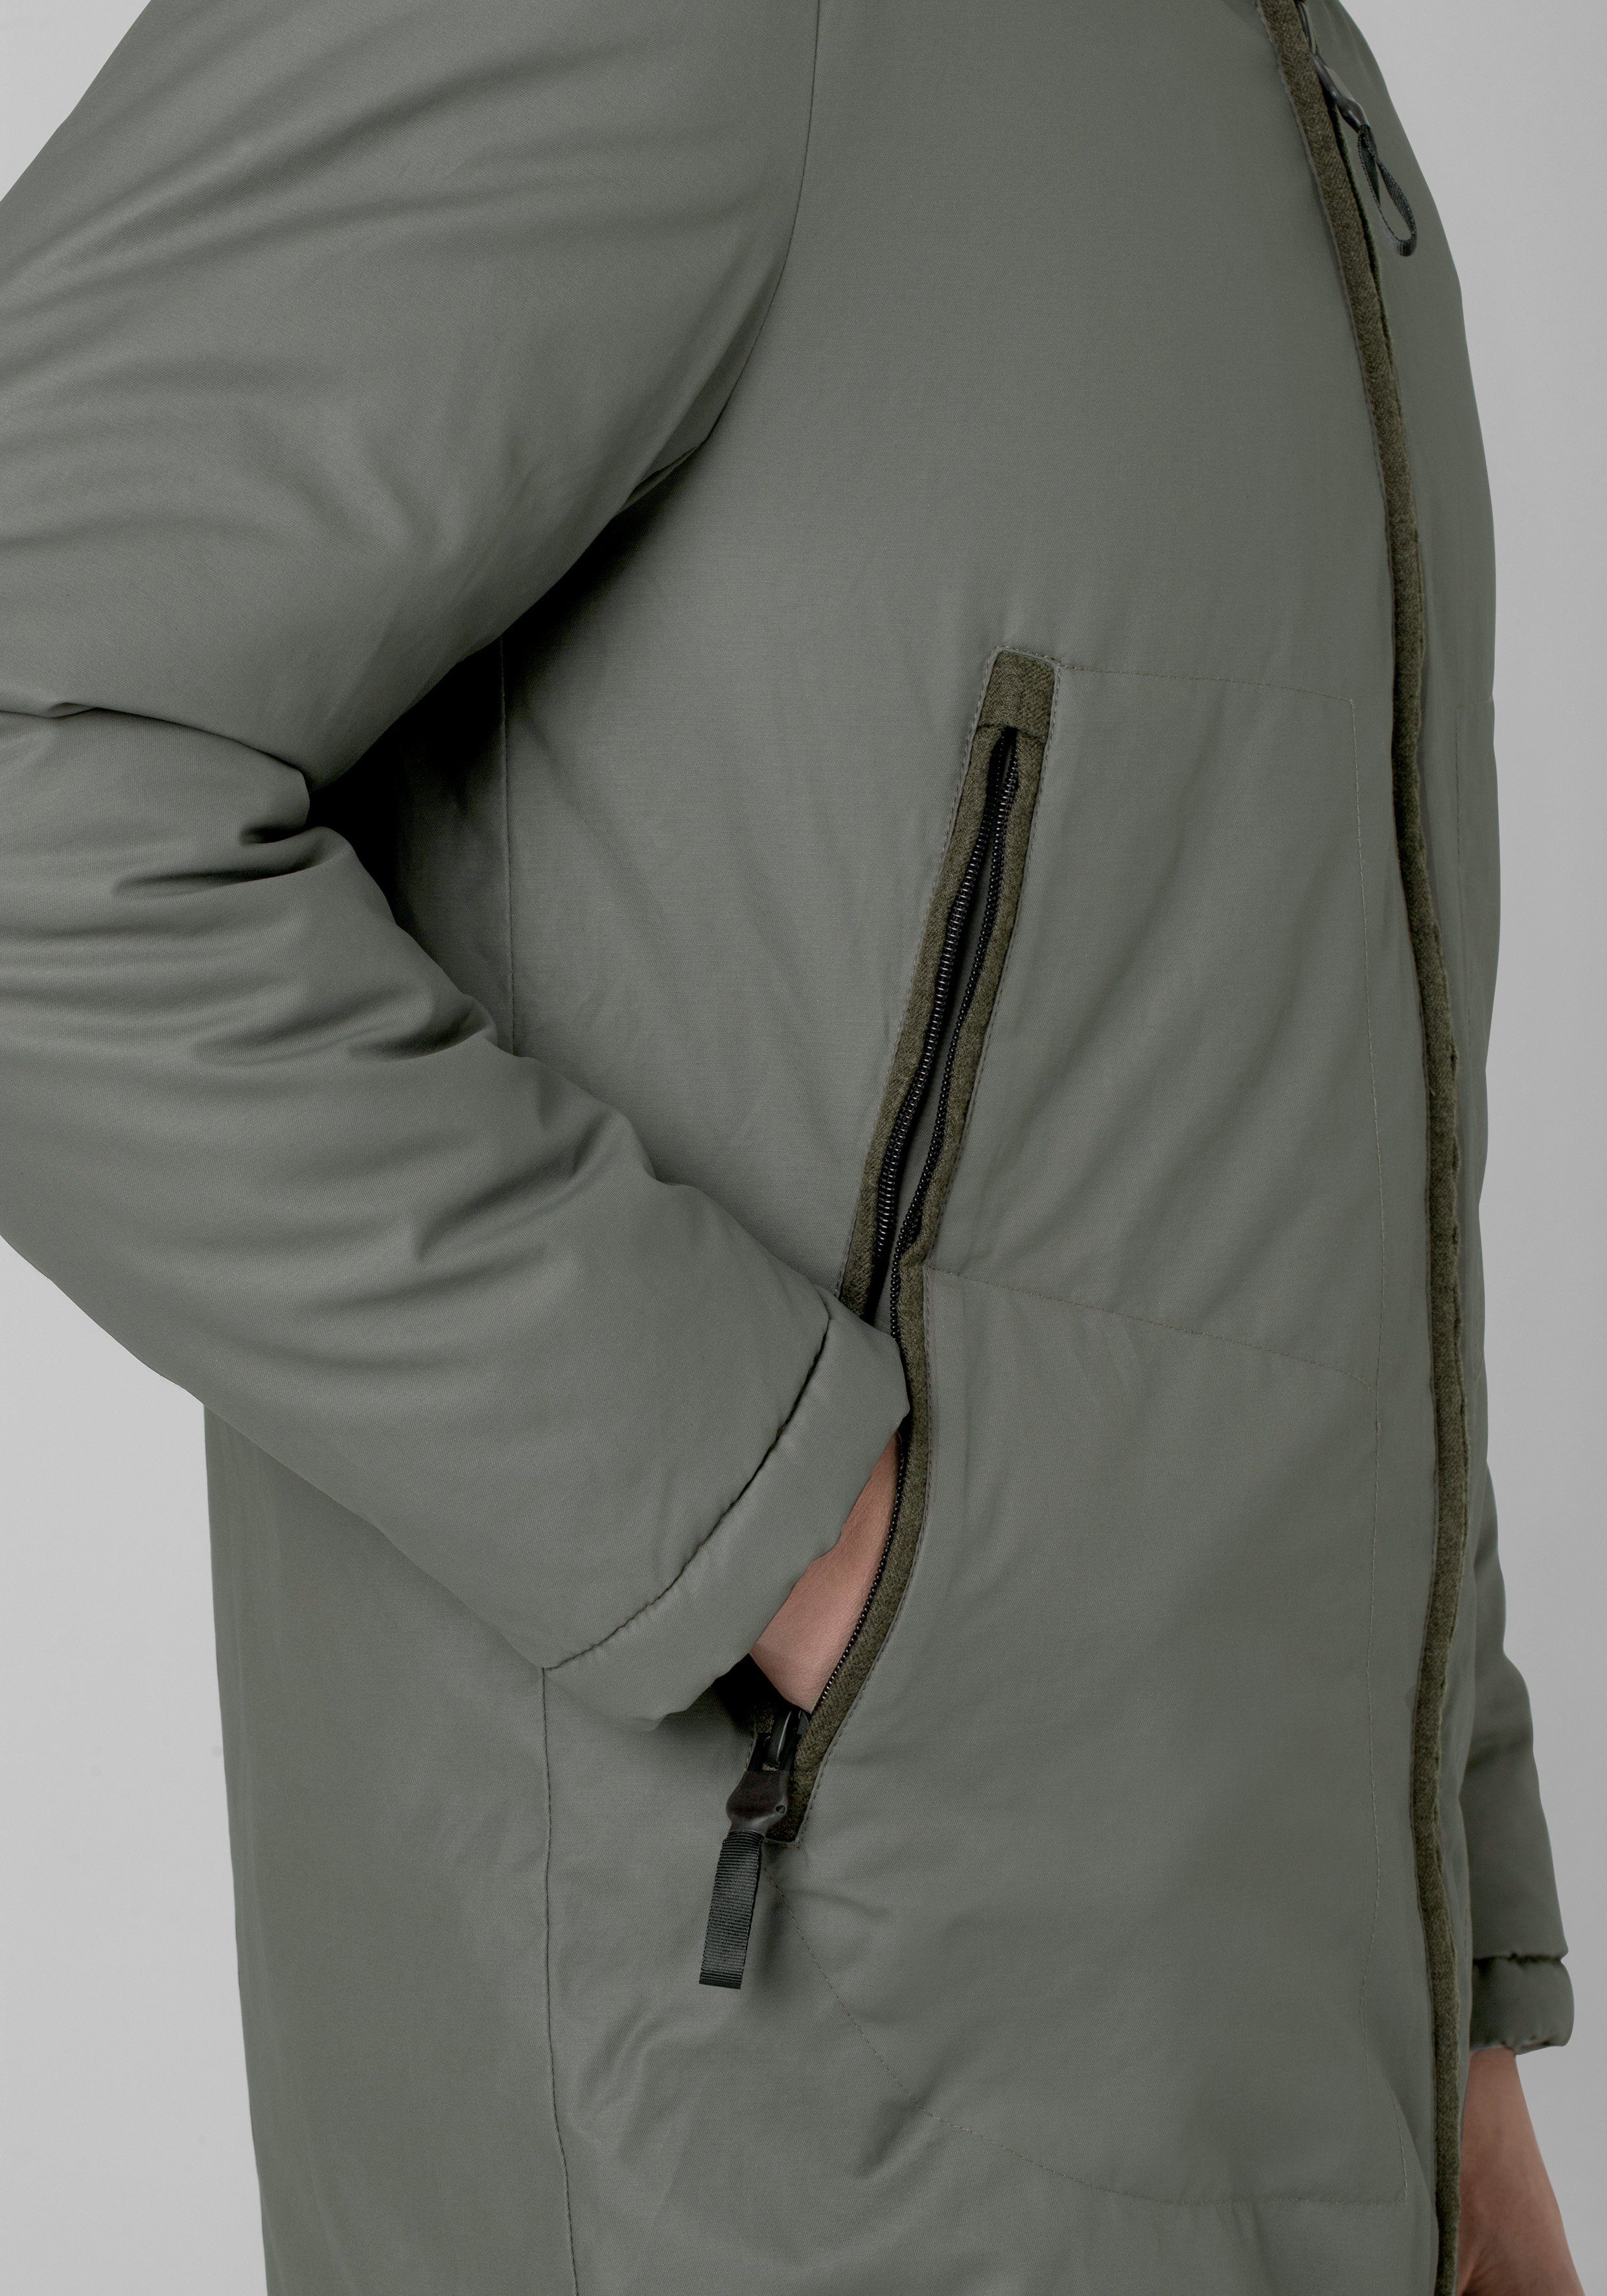 TIMEZONE Winterjacke Long grün Jacket Hood Attachable 1